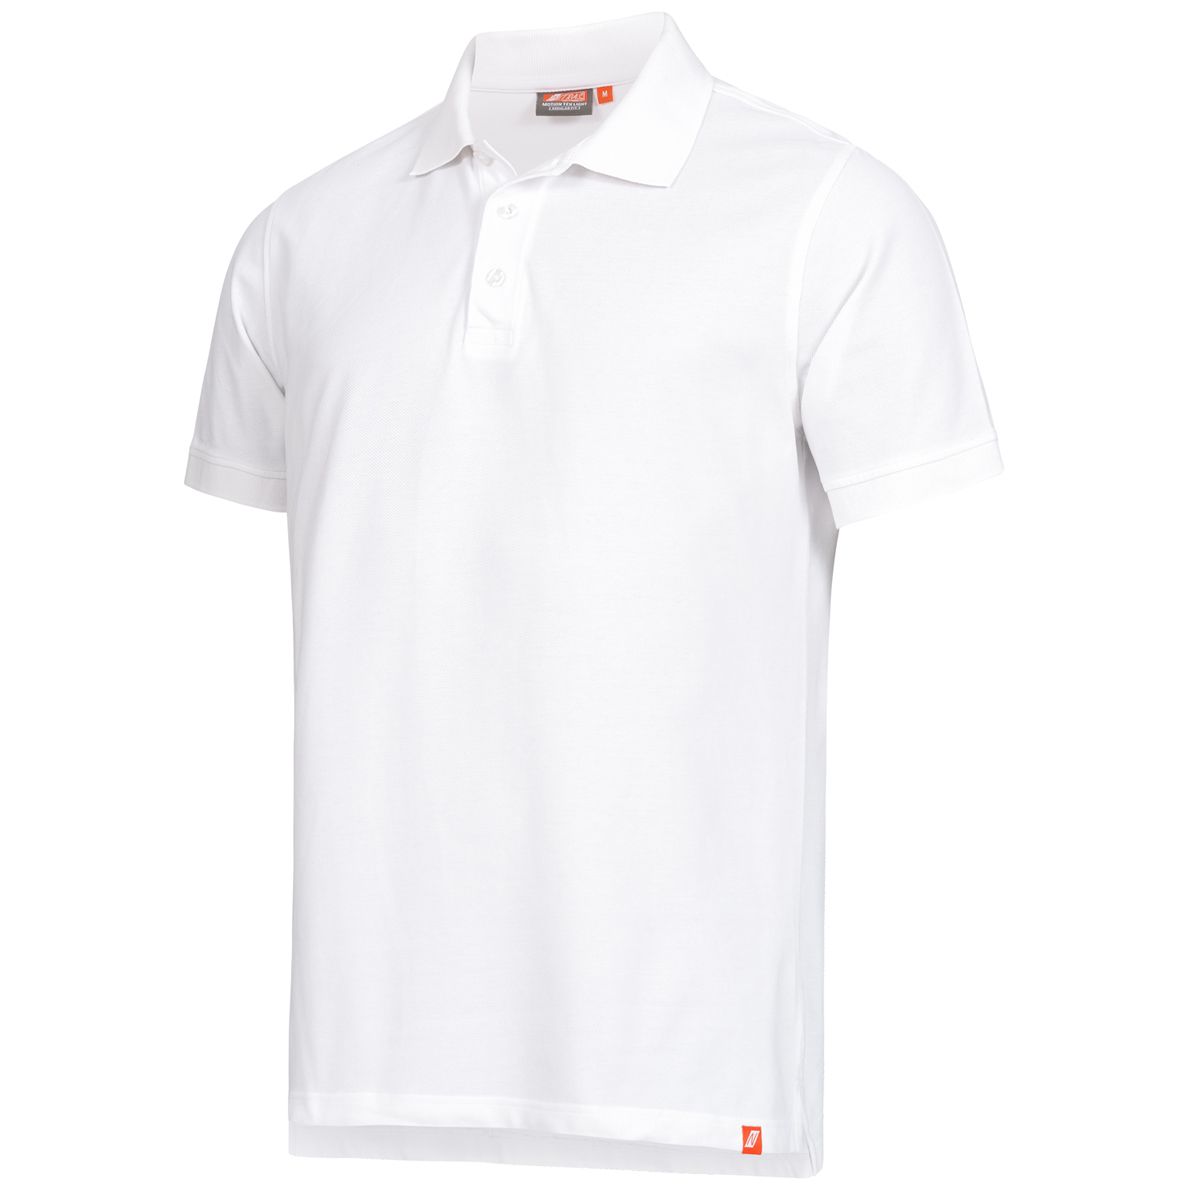 SALE: NITRAS MOTION TEX LIGHT work T-shirt - 100% cotton short sleeve polo shirt - for work - White - 2XL